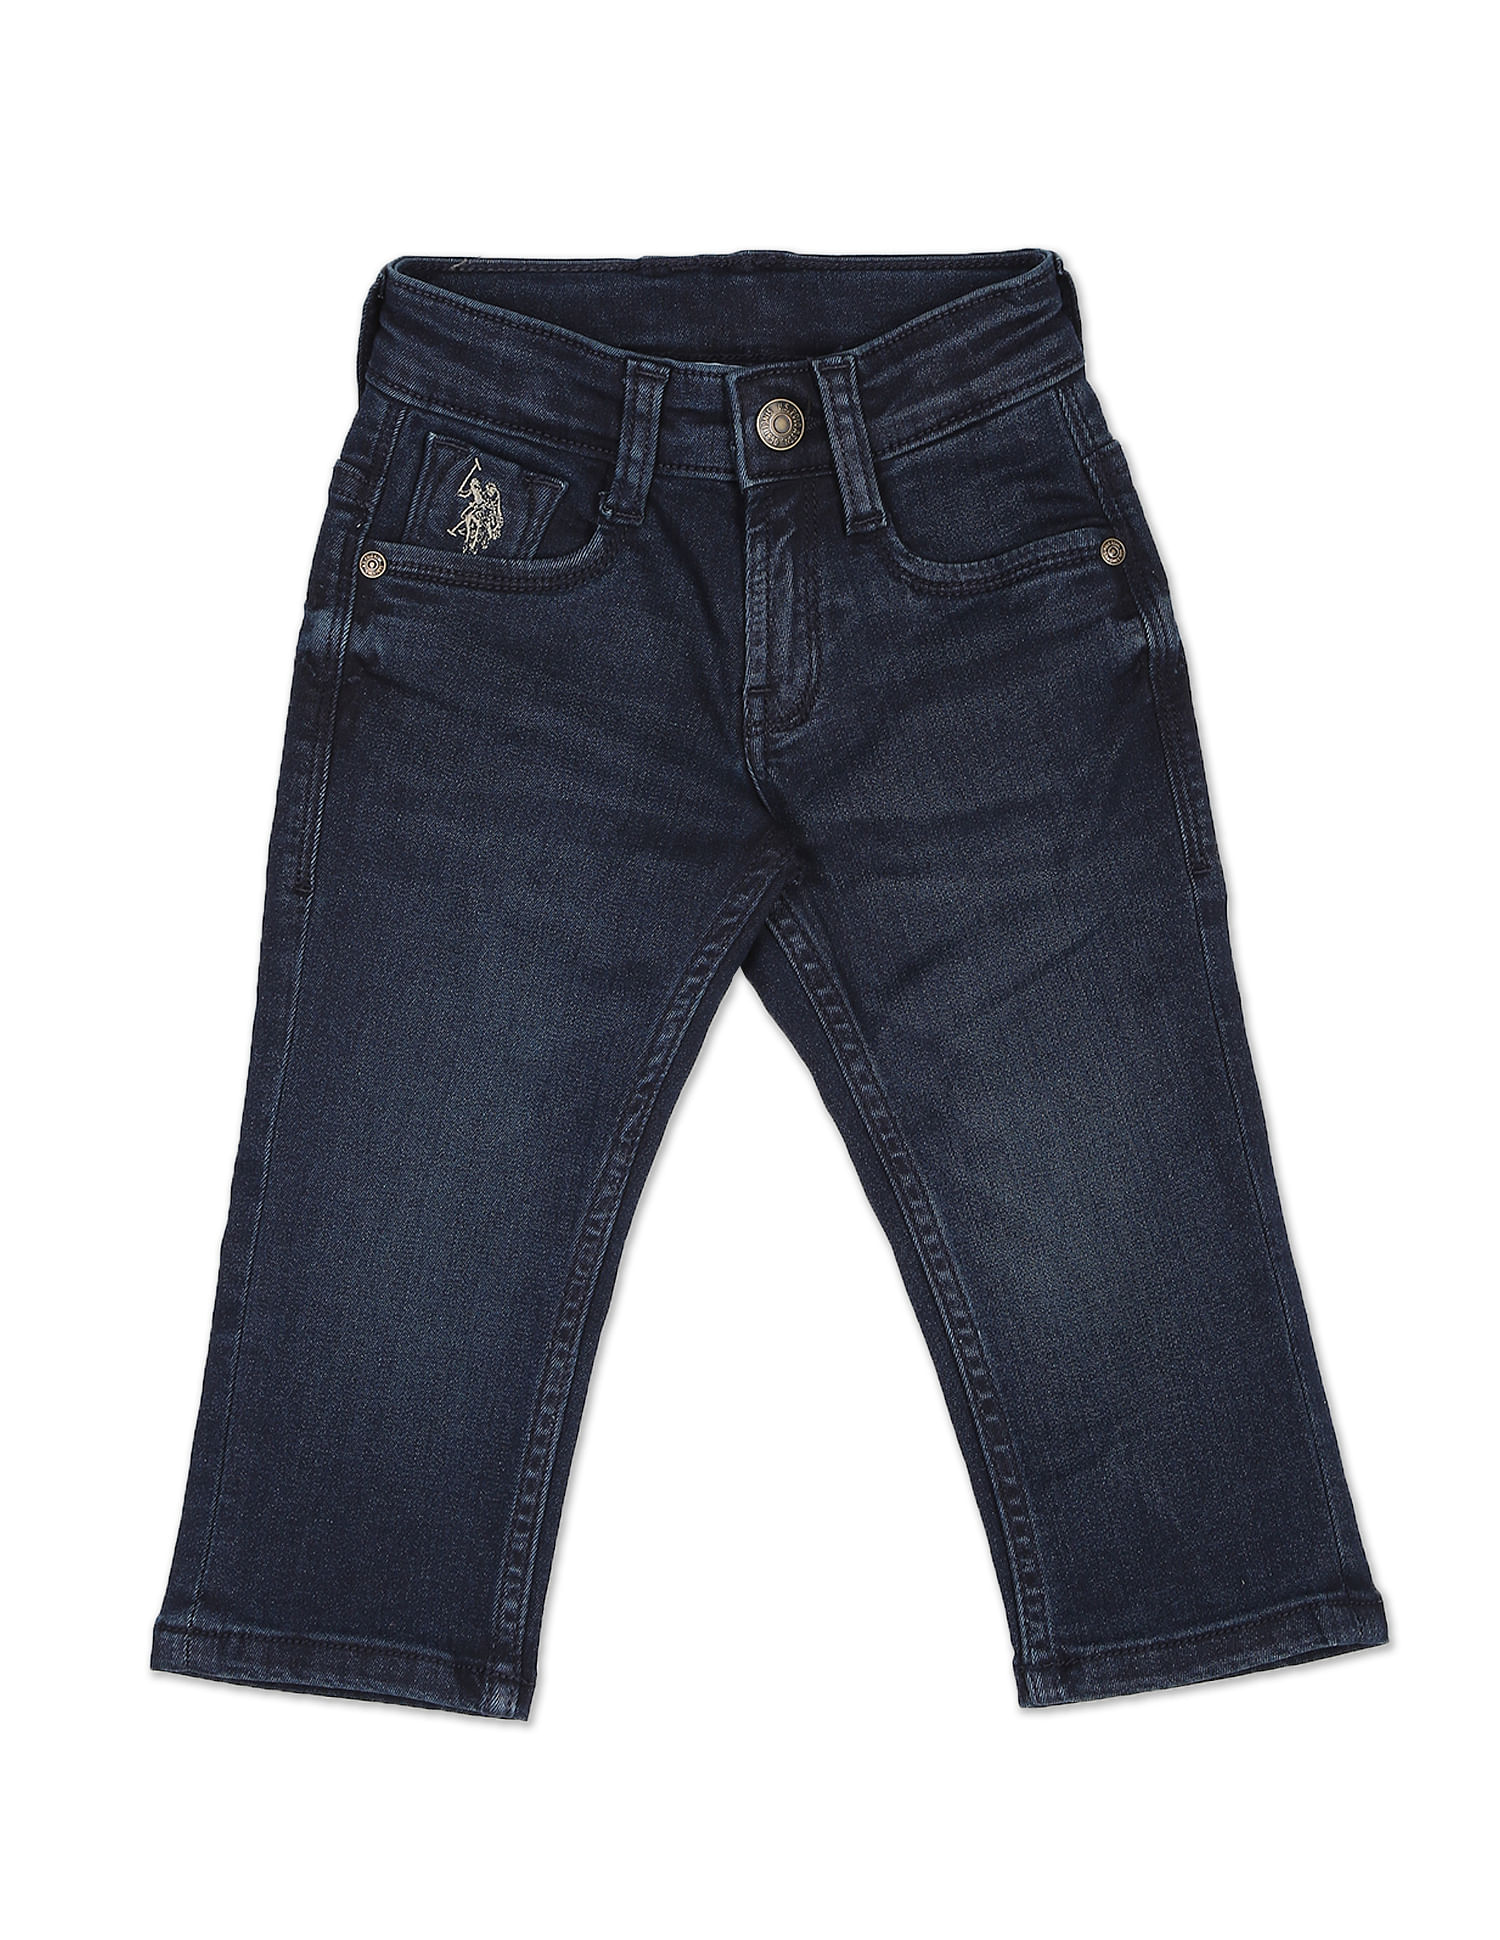 Buy Jeans for Men  Mens Denim Jeans Online American Eagle India